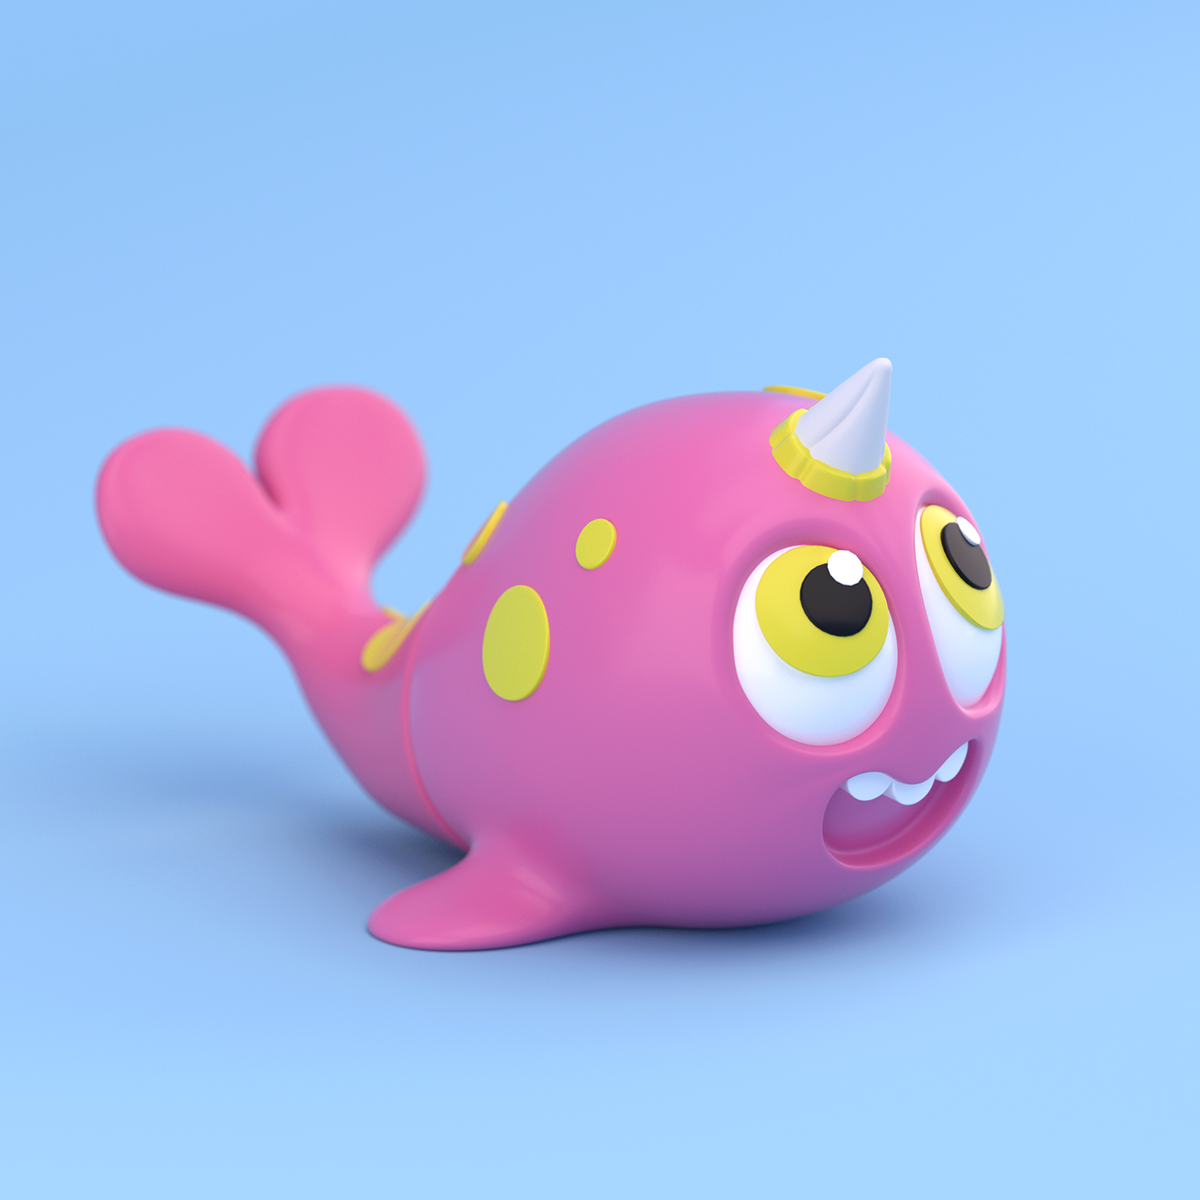 toys octopus narwhale 3D 3d modeling 3D Rendering vr AR